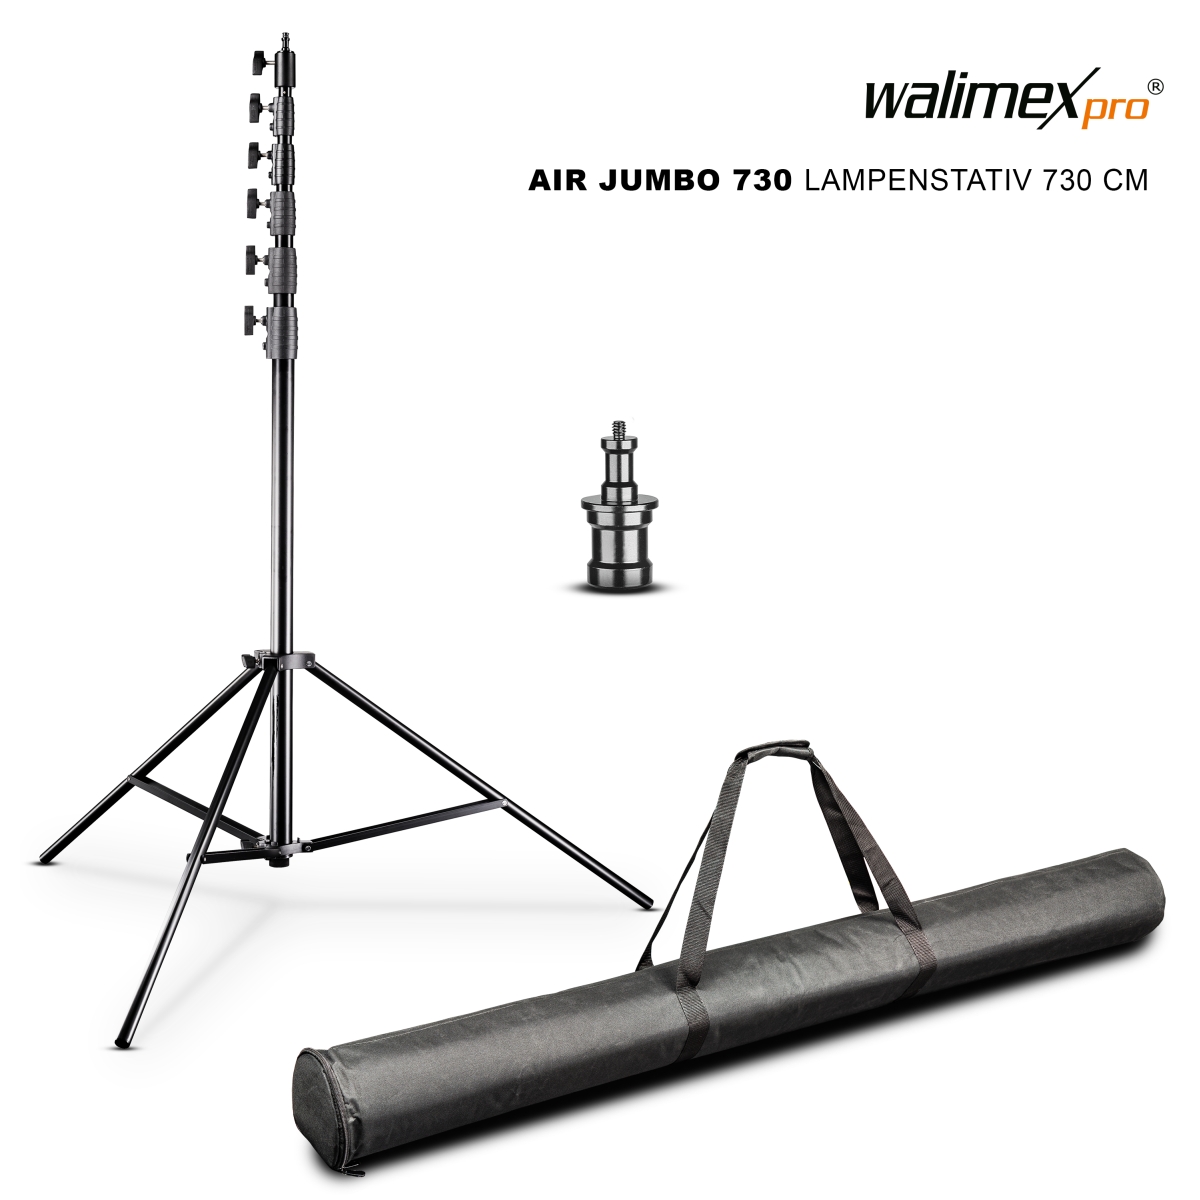 Walimex pro AIR Jumbo 730 Lampenstativ 730 cm